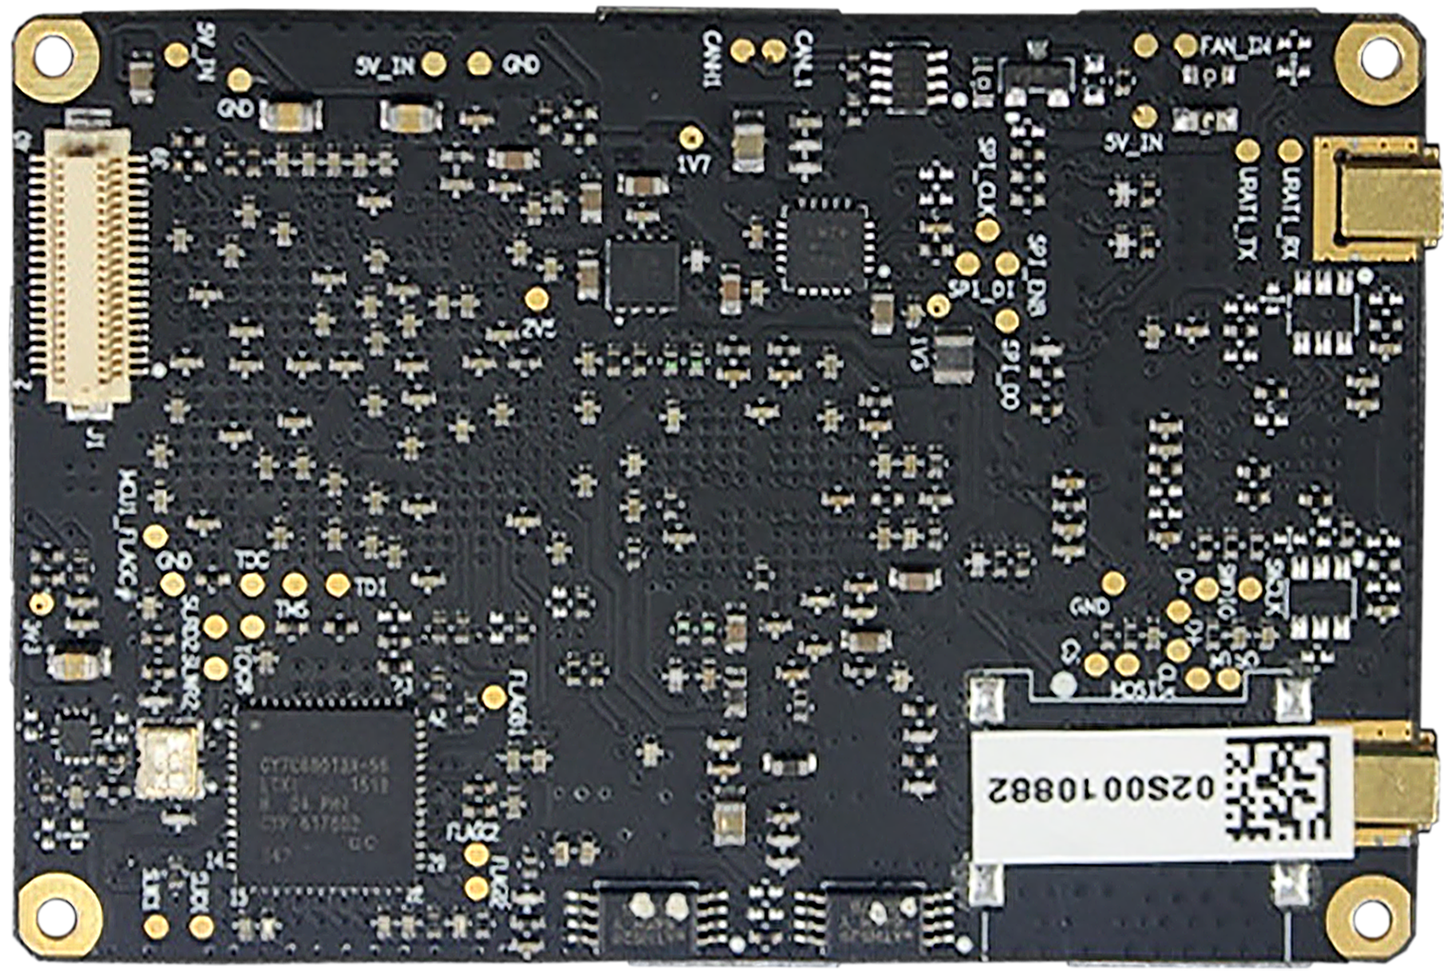 IG810 Air OFDM Transceiver board · o-gs/dji-firmware-tools Wiki 